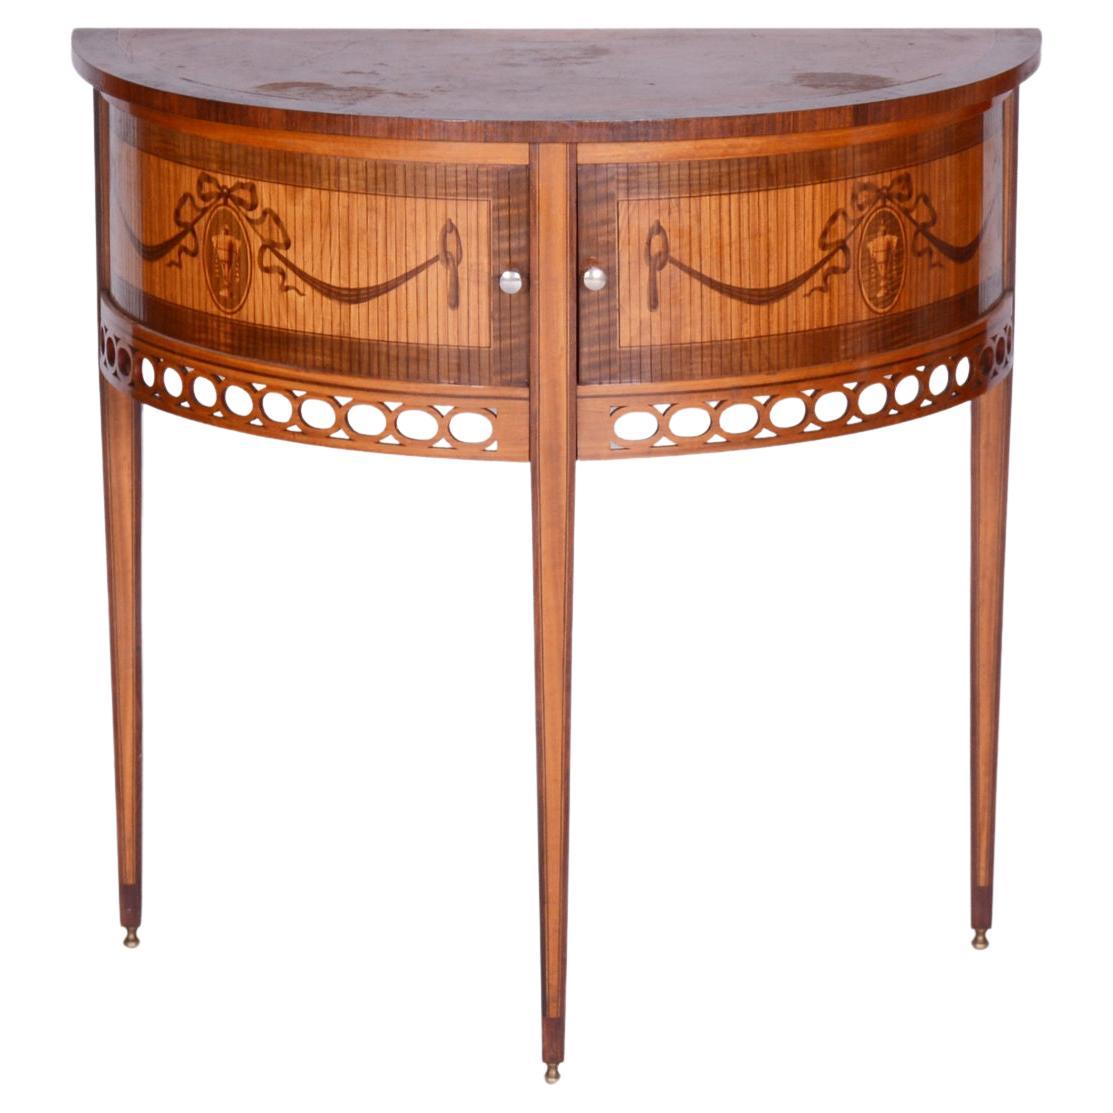 Restored Biedermeier Side Table, Walnut, Maple, Unique Marquetry, France, 1850s